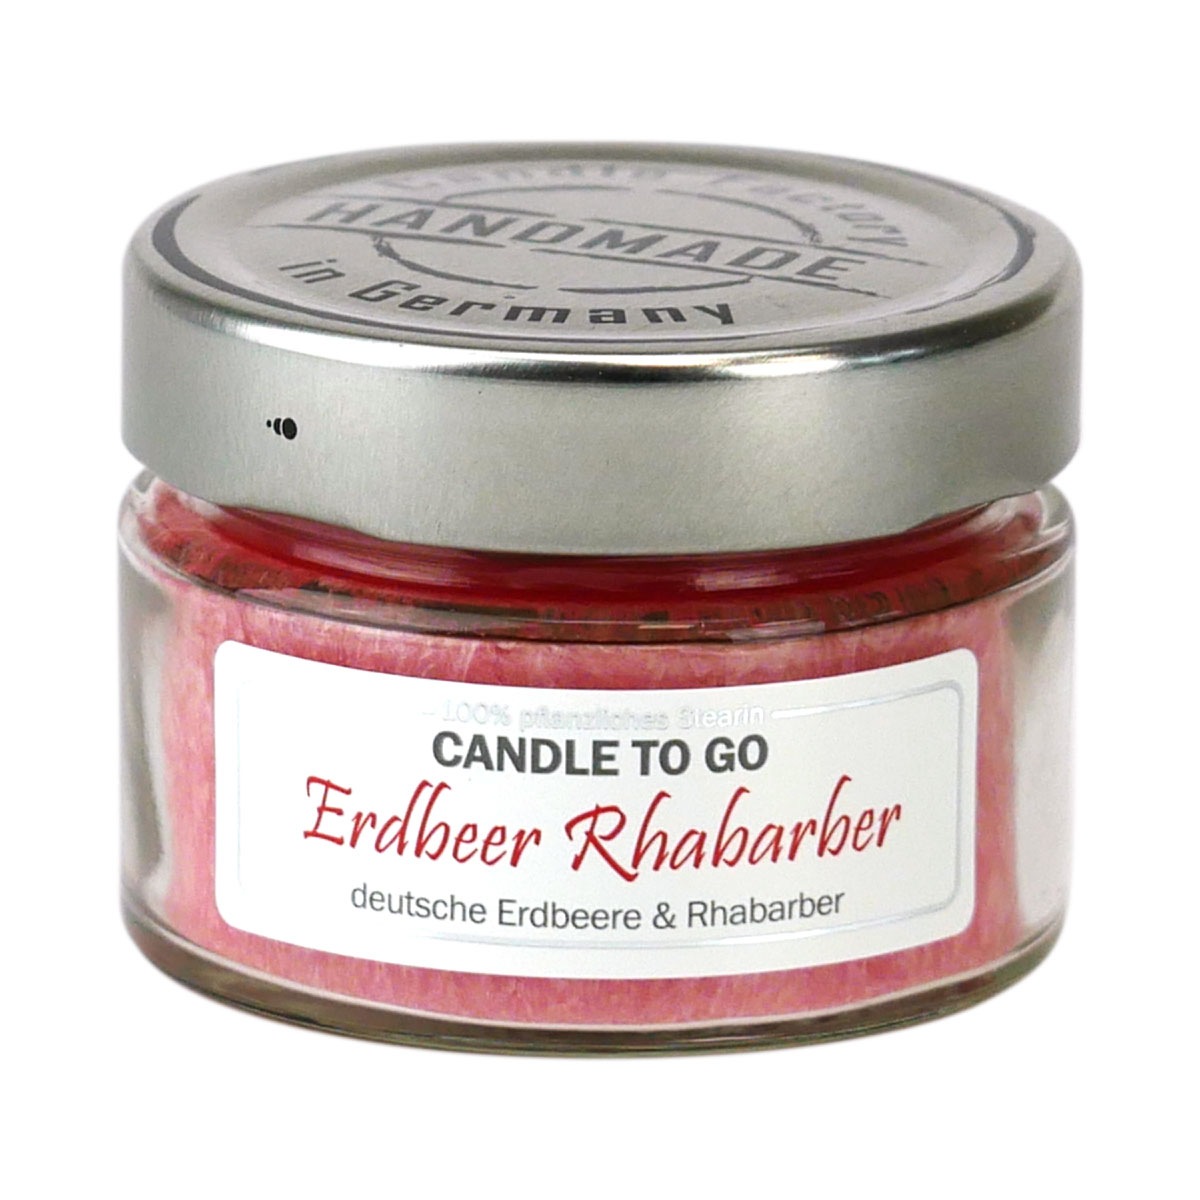 Erdbeer Rhabarber - Candle to Go Duftkerze von Candle Factory